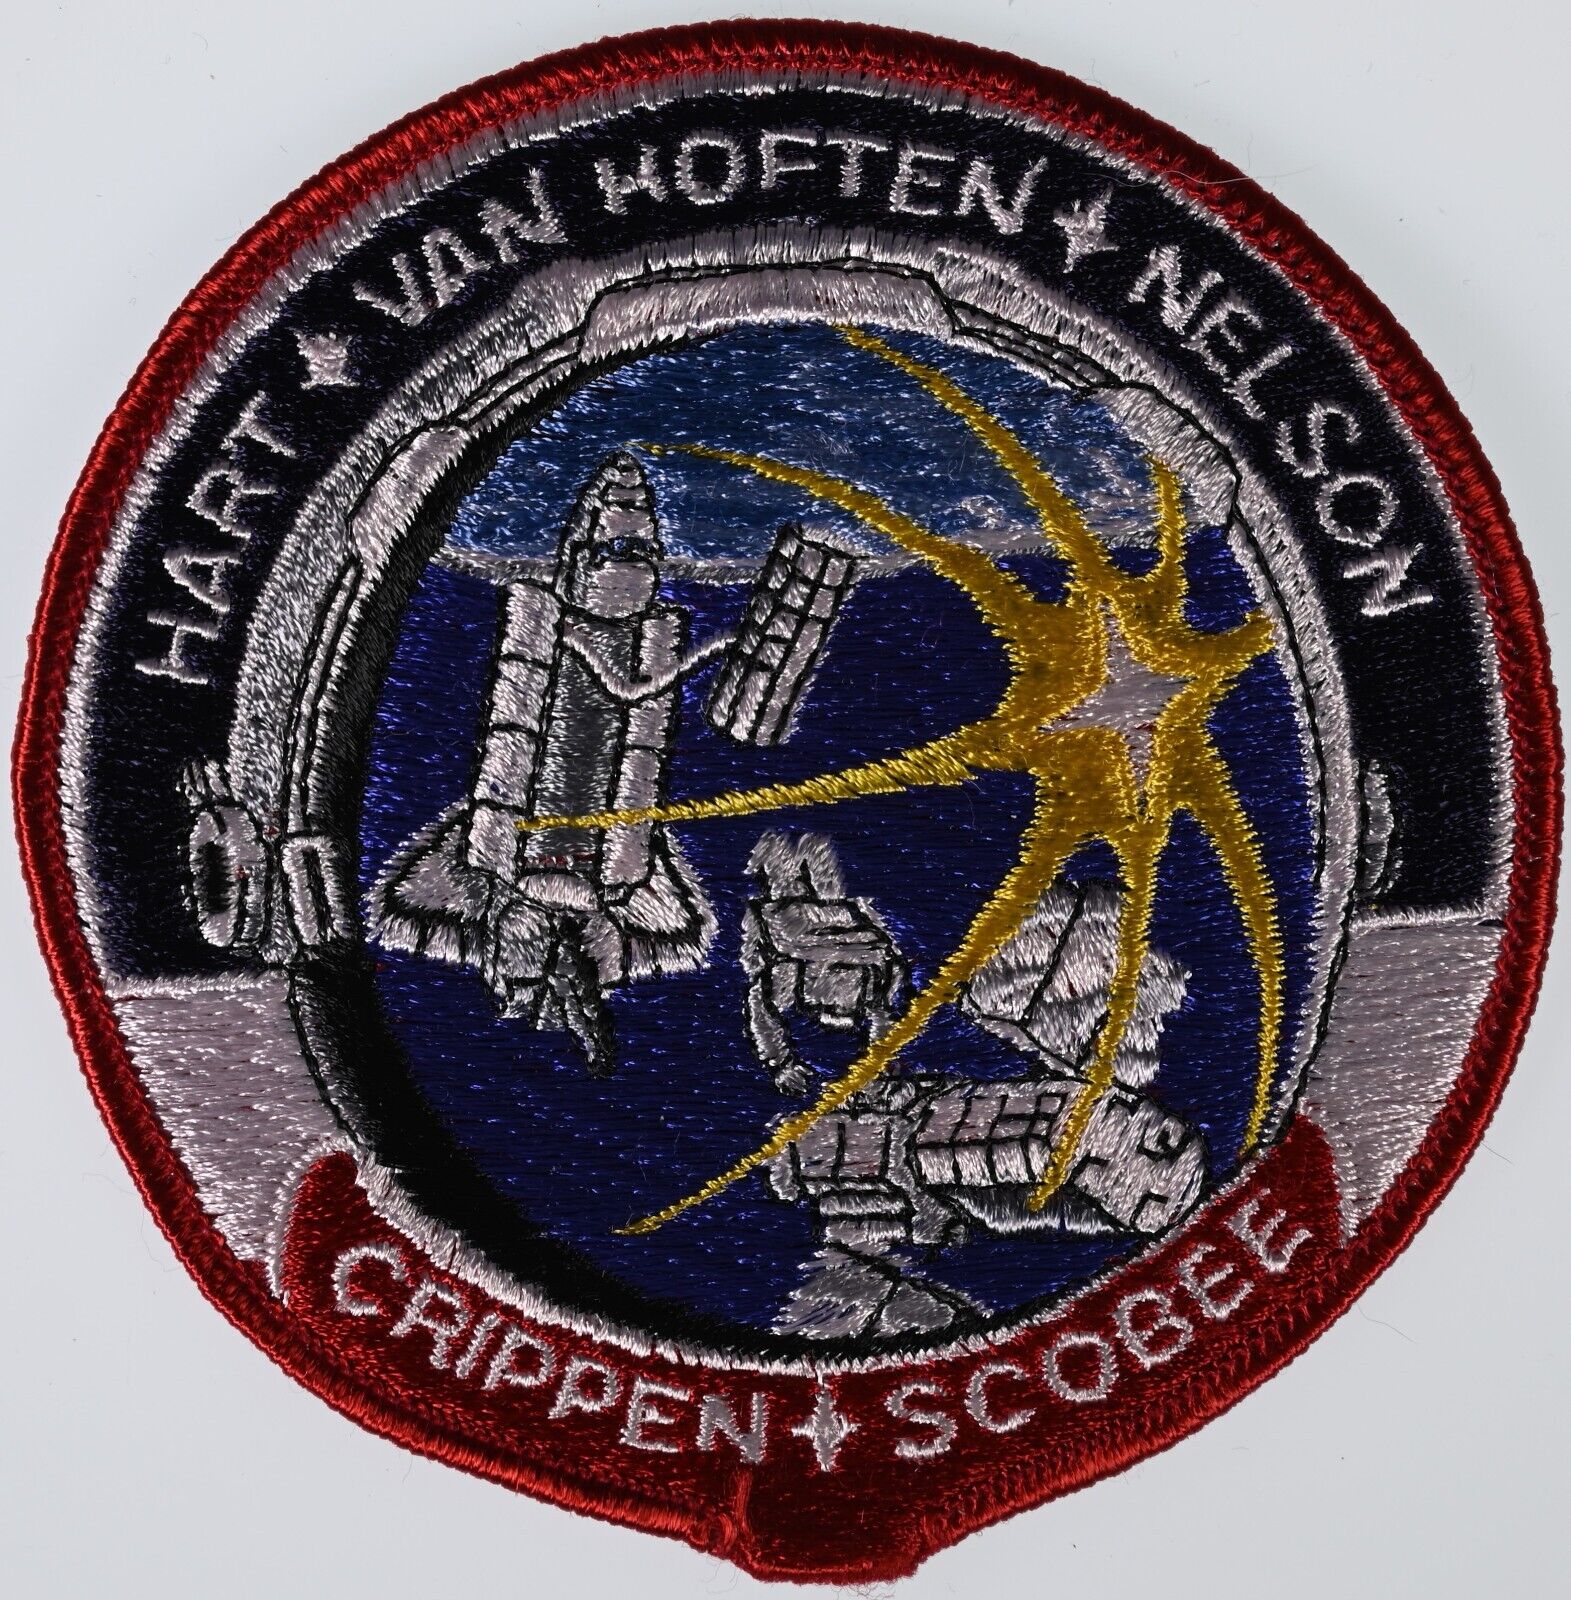 NASA SPACE SHUTTLE STS-41C MISSION PATCH HART, VAN HOFTEN, NELSON, CRIPPEN